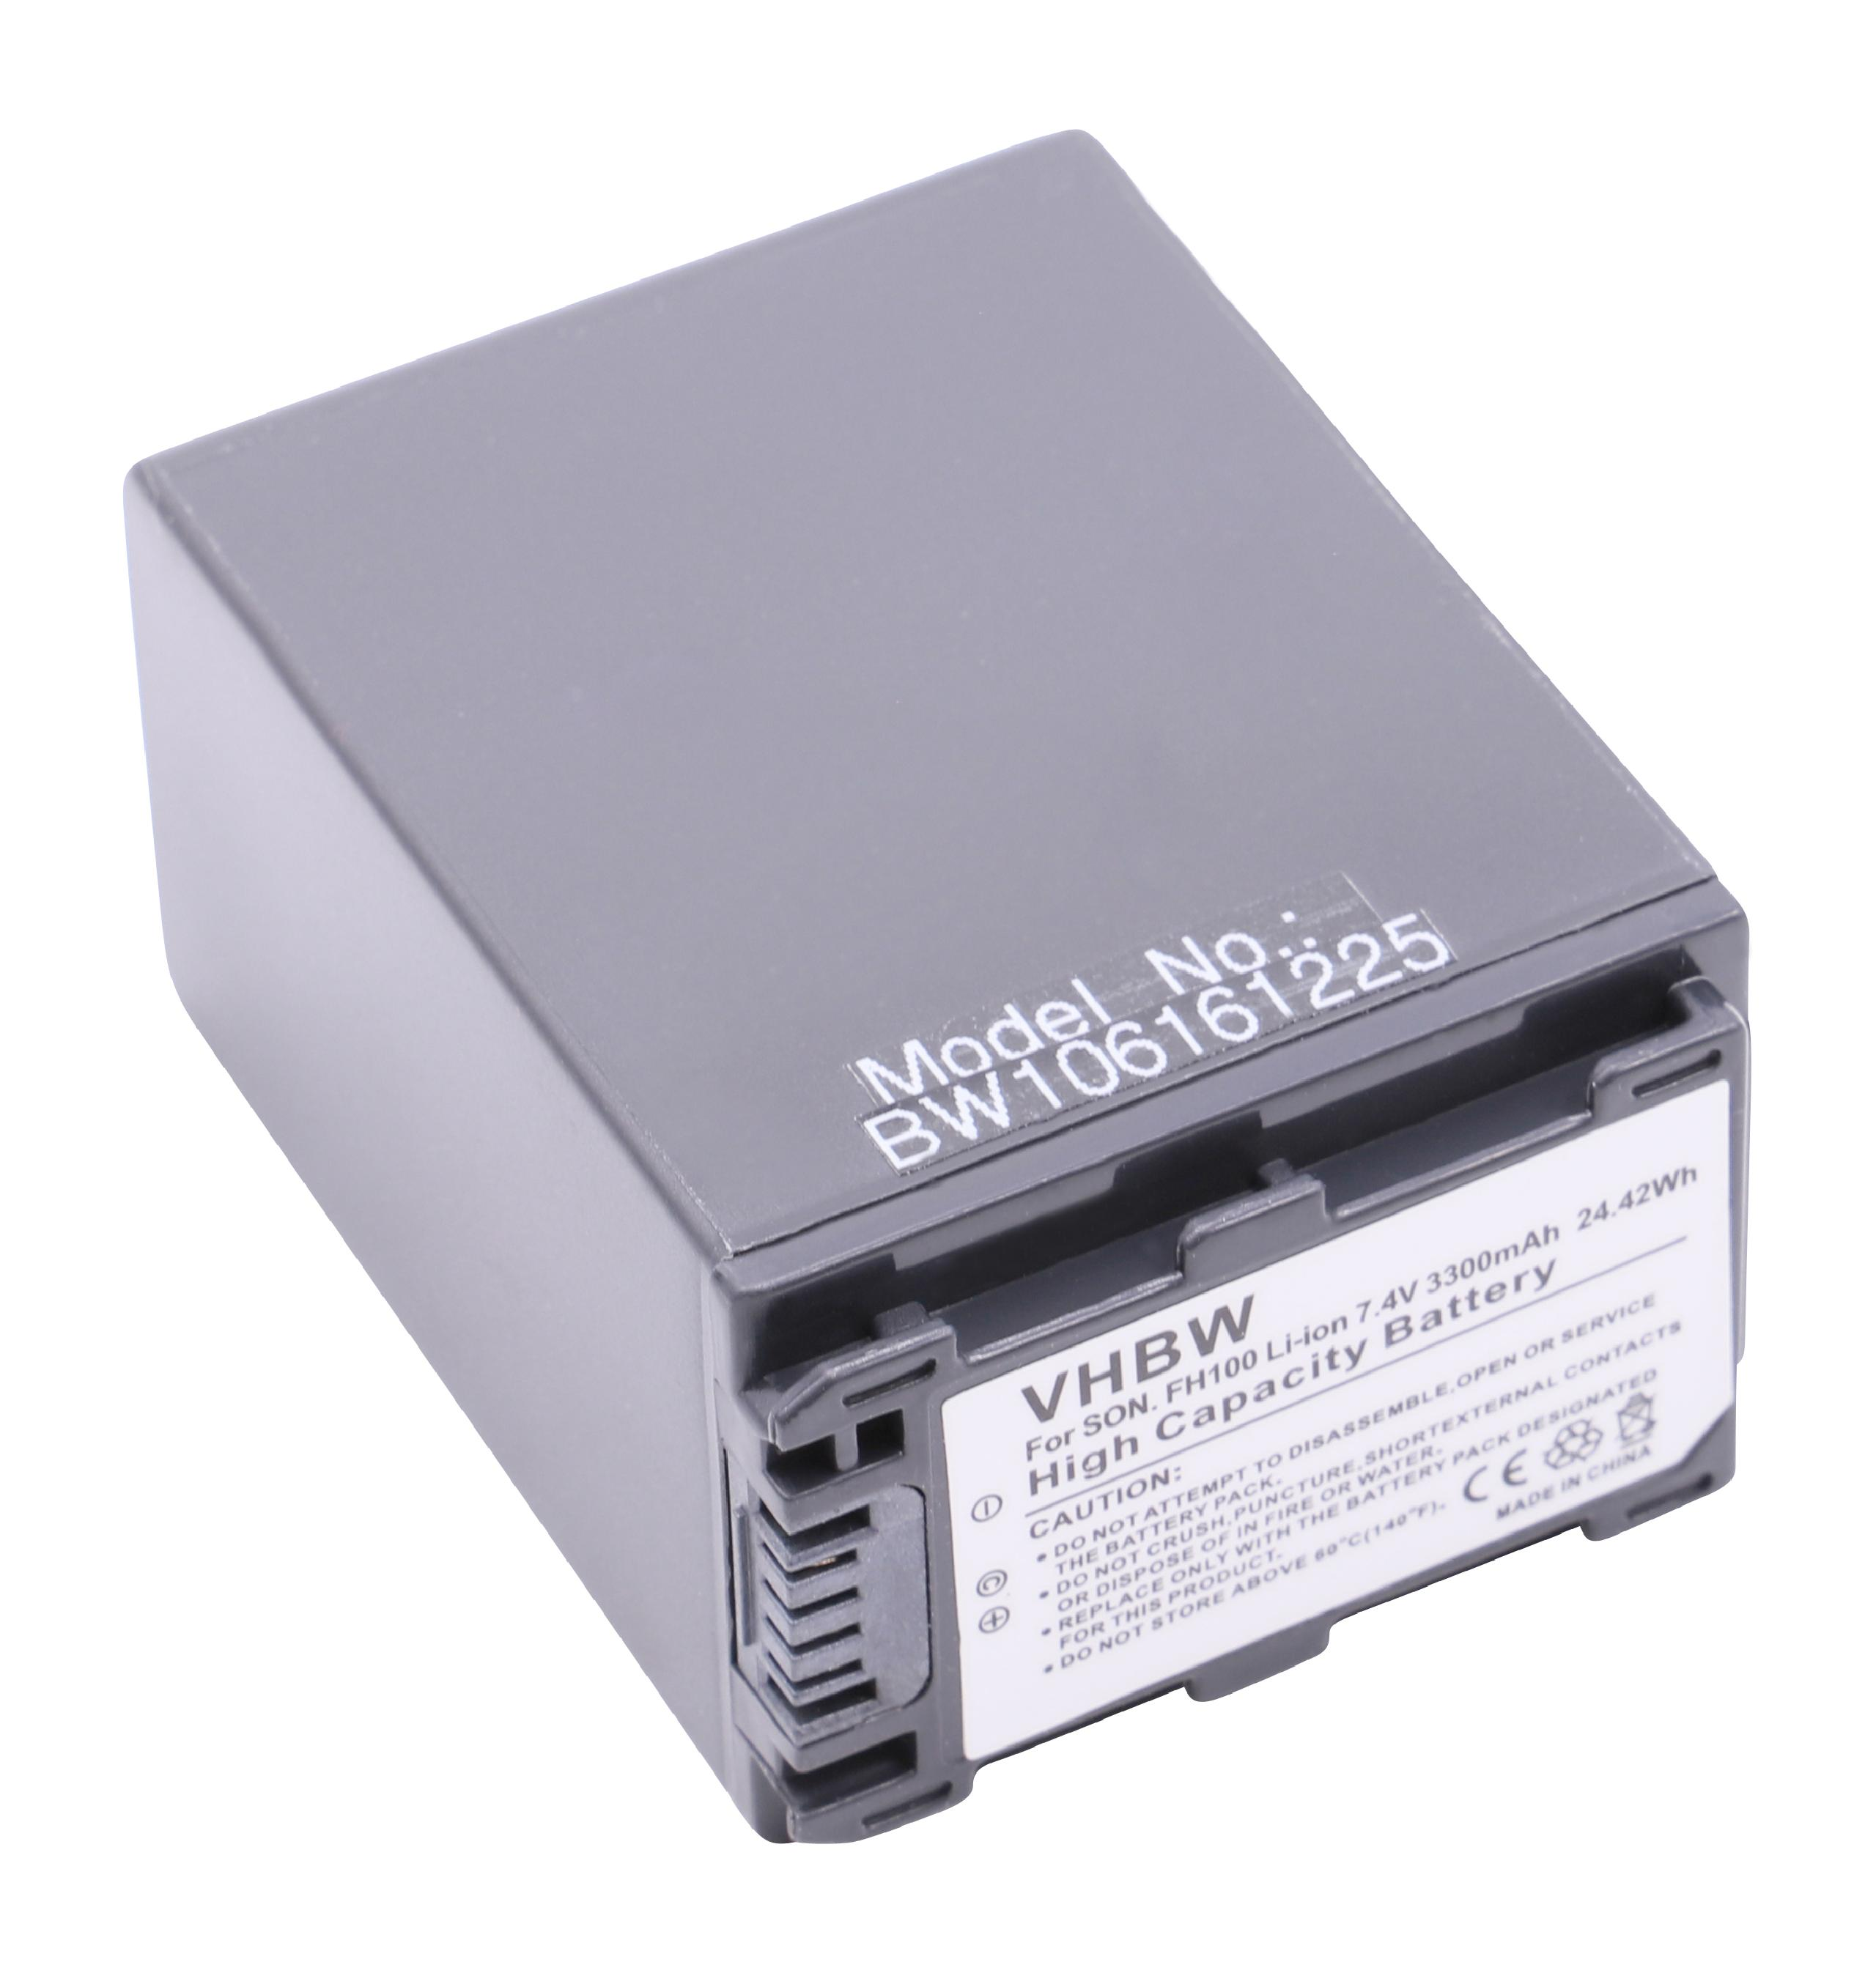 VHBW kompatibel mit Sony DCR-SR38, 7.4 DCR-SR57, DCR-SR52(E), - Li-Ion Akku DCR-SR38E, DCR-SR55(E) Videokamera, Volt, 3300